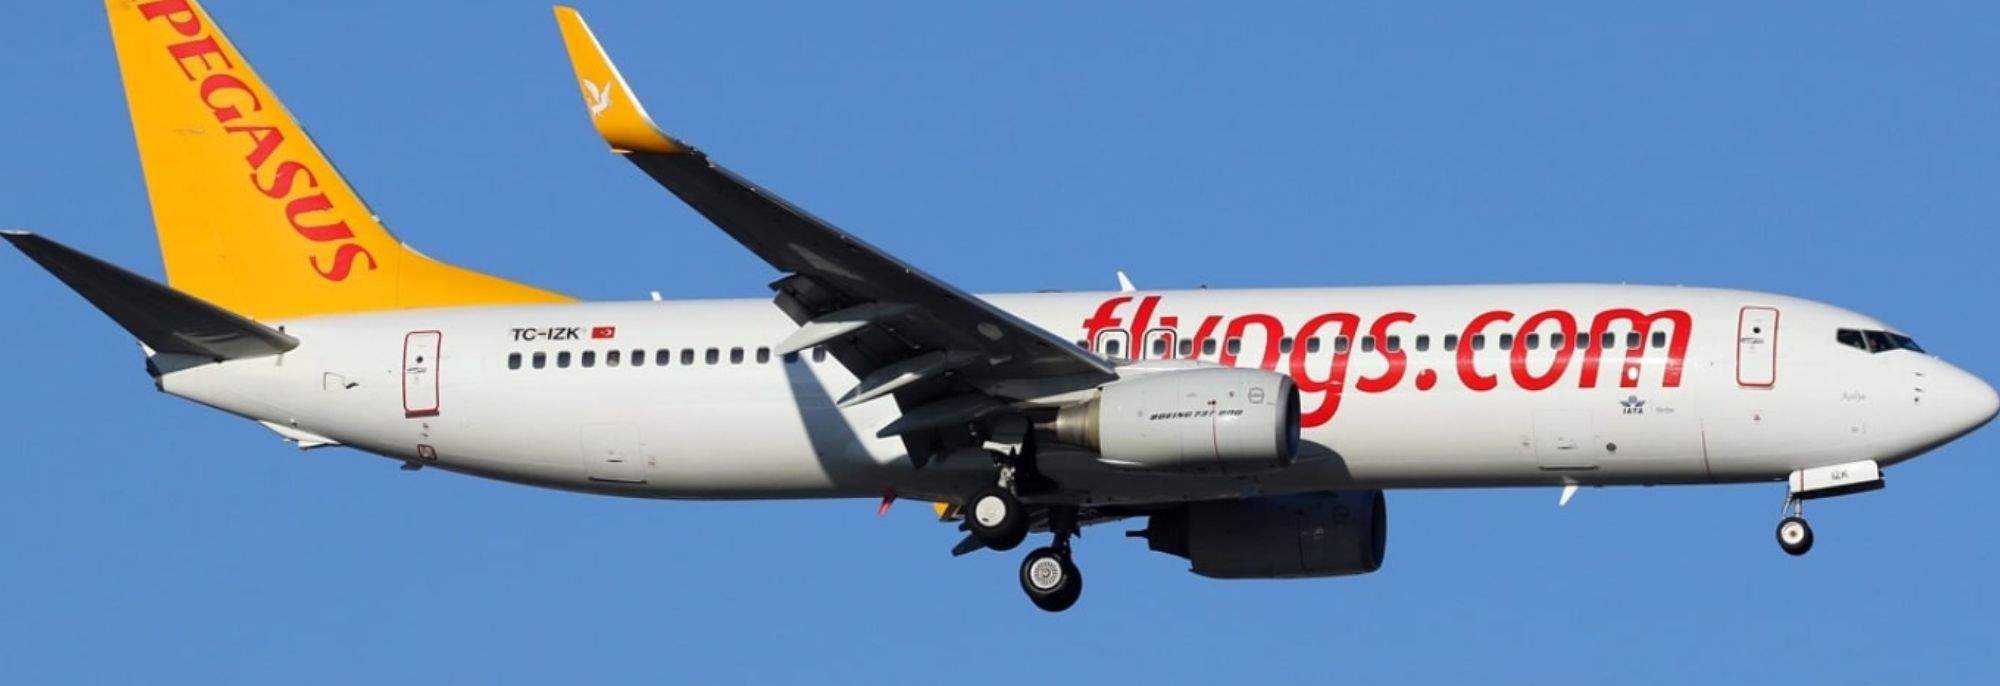 Verbindung Türkei-Polen: Pegasus Airlines landet am Krakauer Flughafen